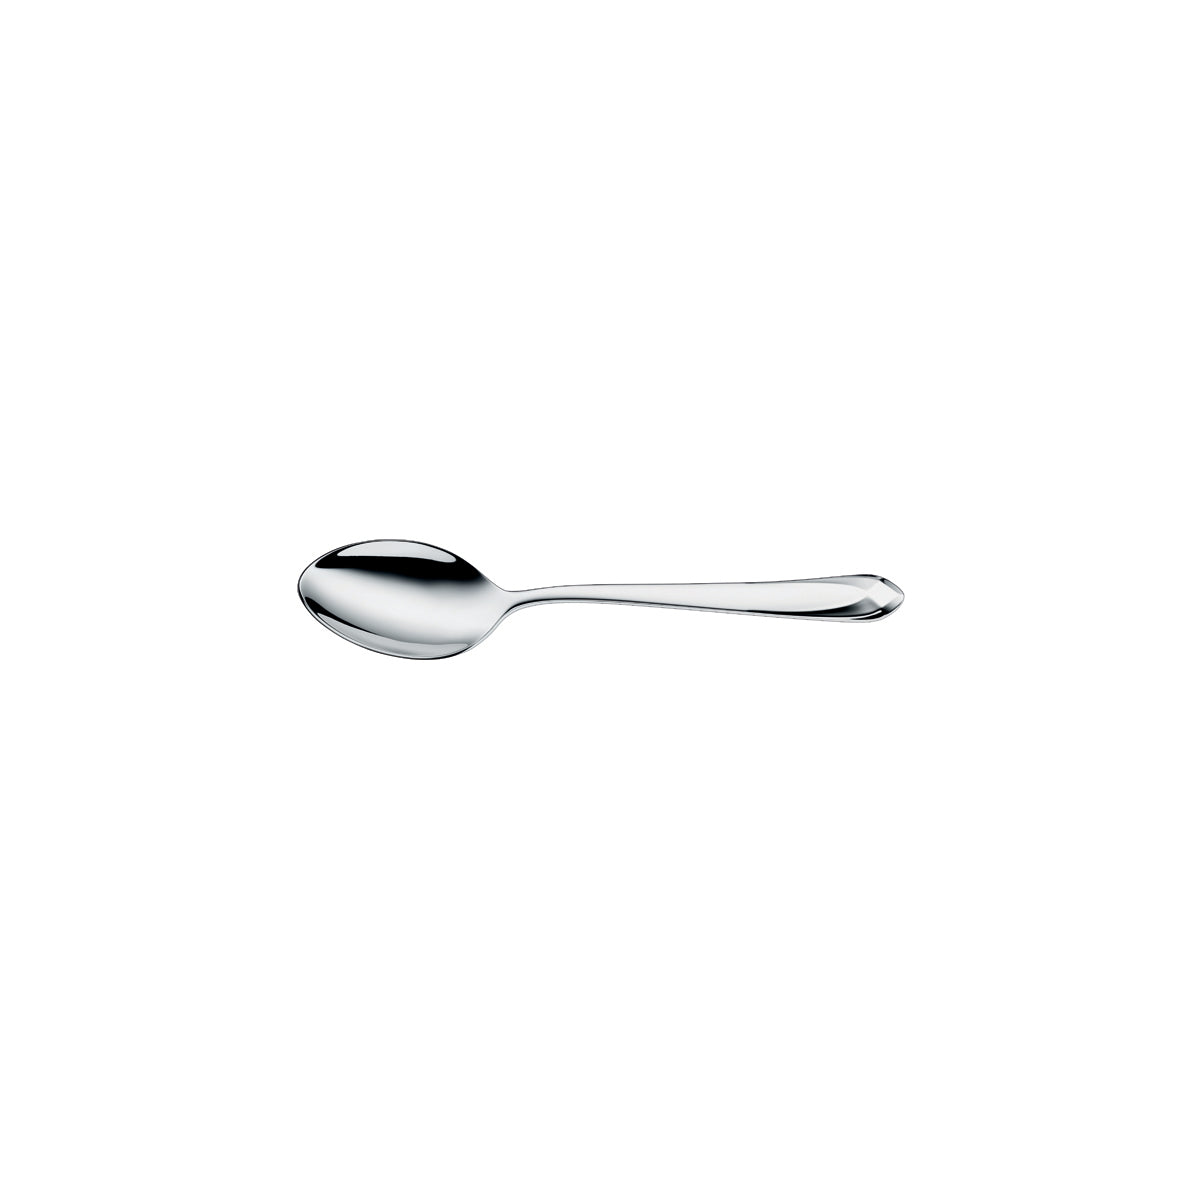 54.7304.6030 WMF Juwel Dessert Spoon Silverplated Tomkin Australia Hospitality Supplies